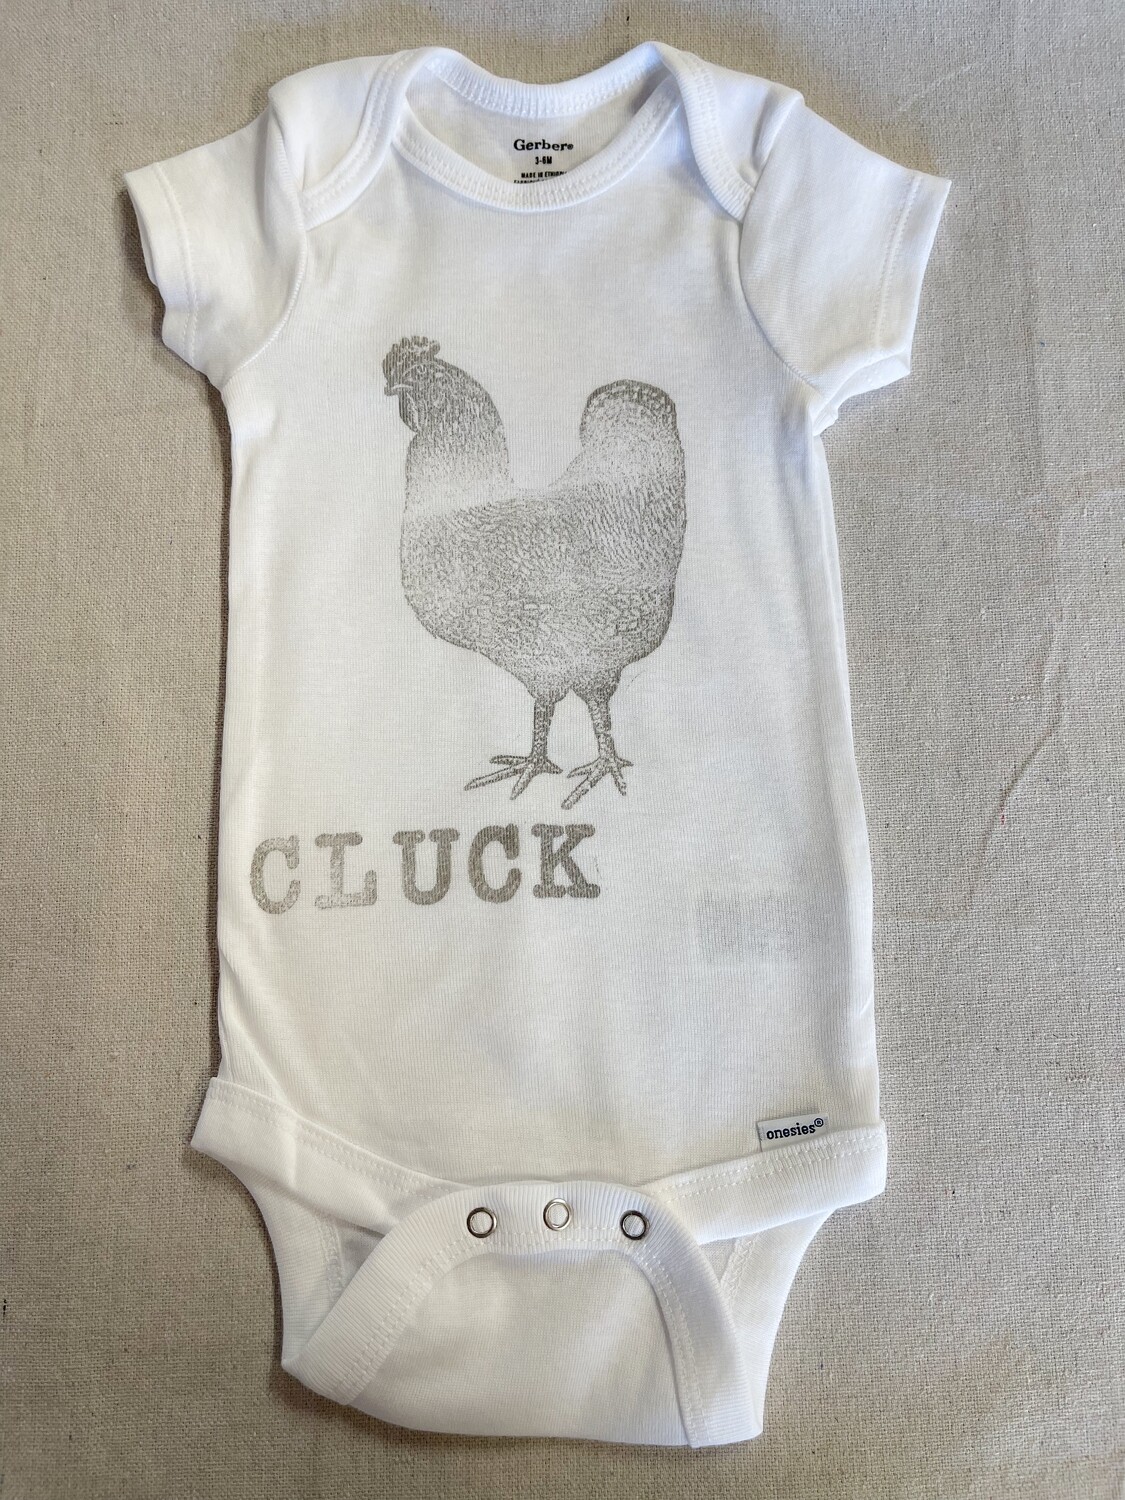 Chicken Printed Baby One-Piece 3-6 Months Short Sleeve